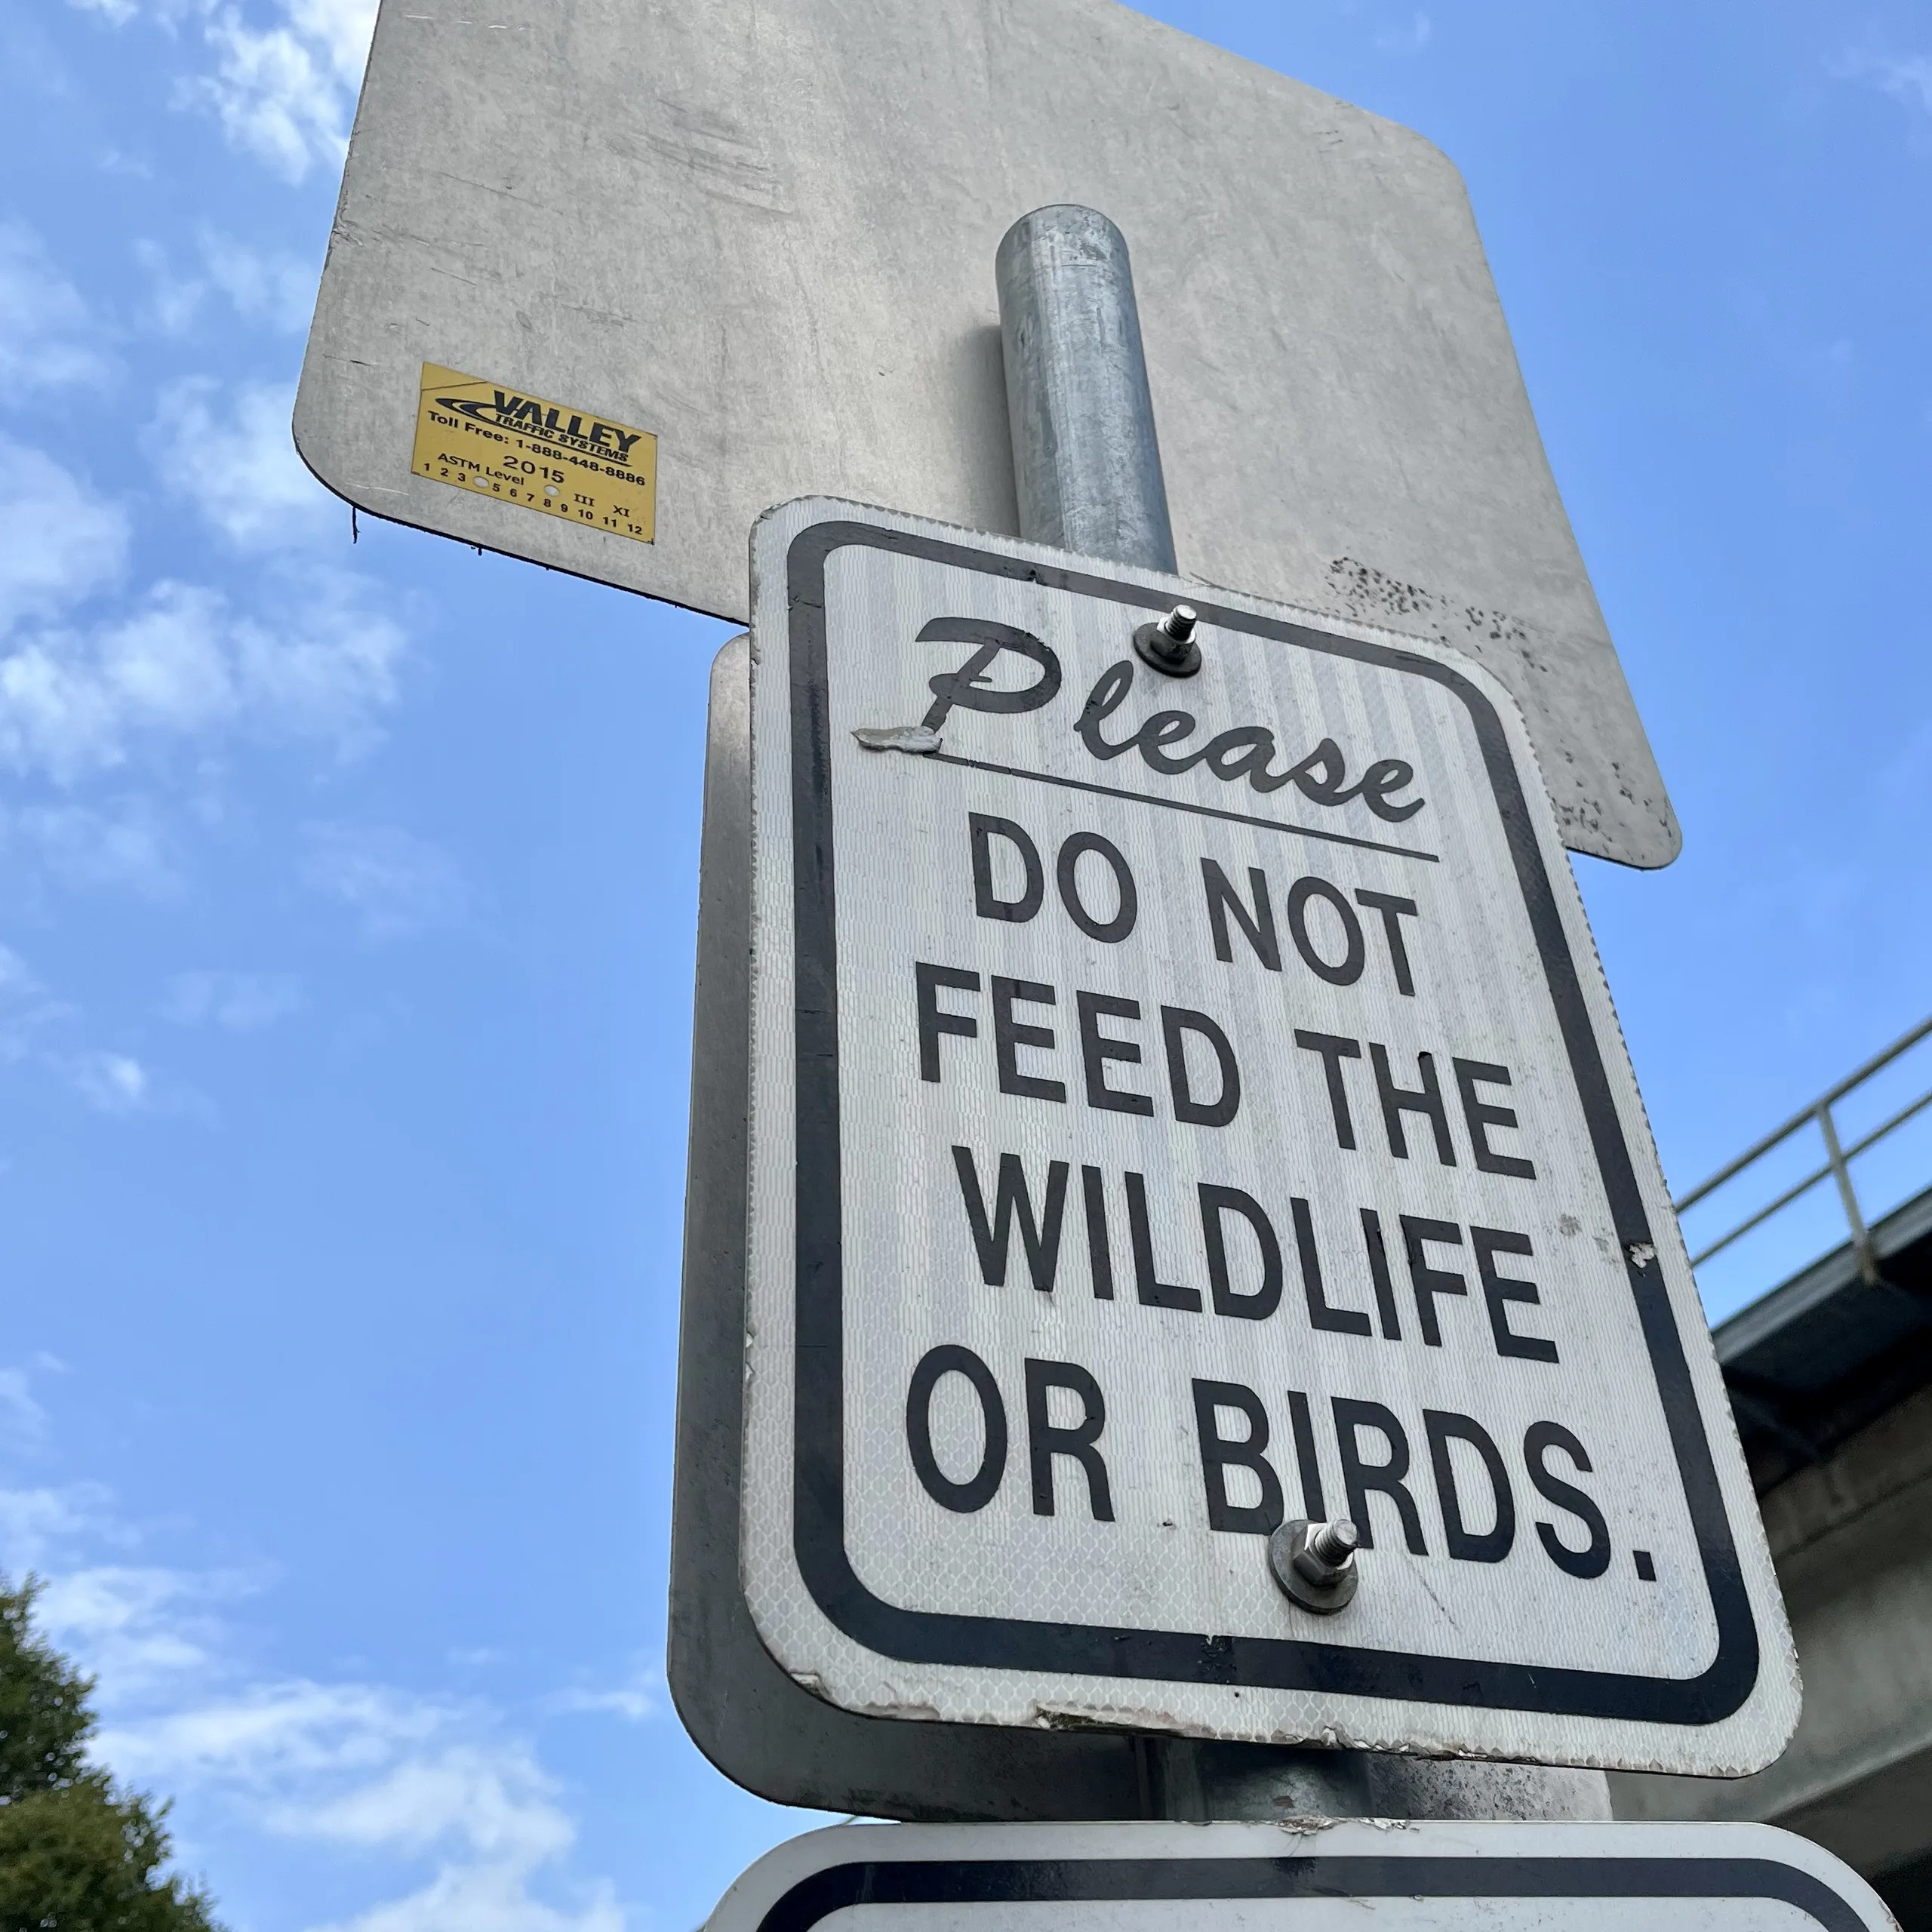 Do not feed the wildlife